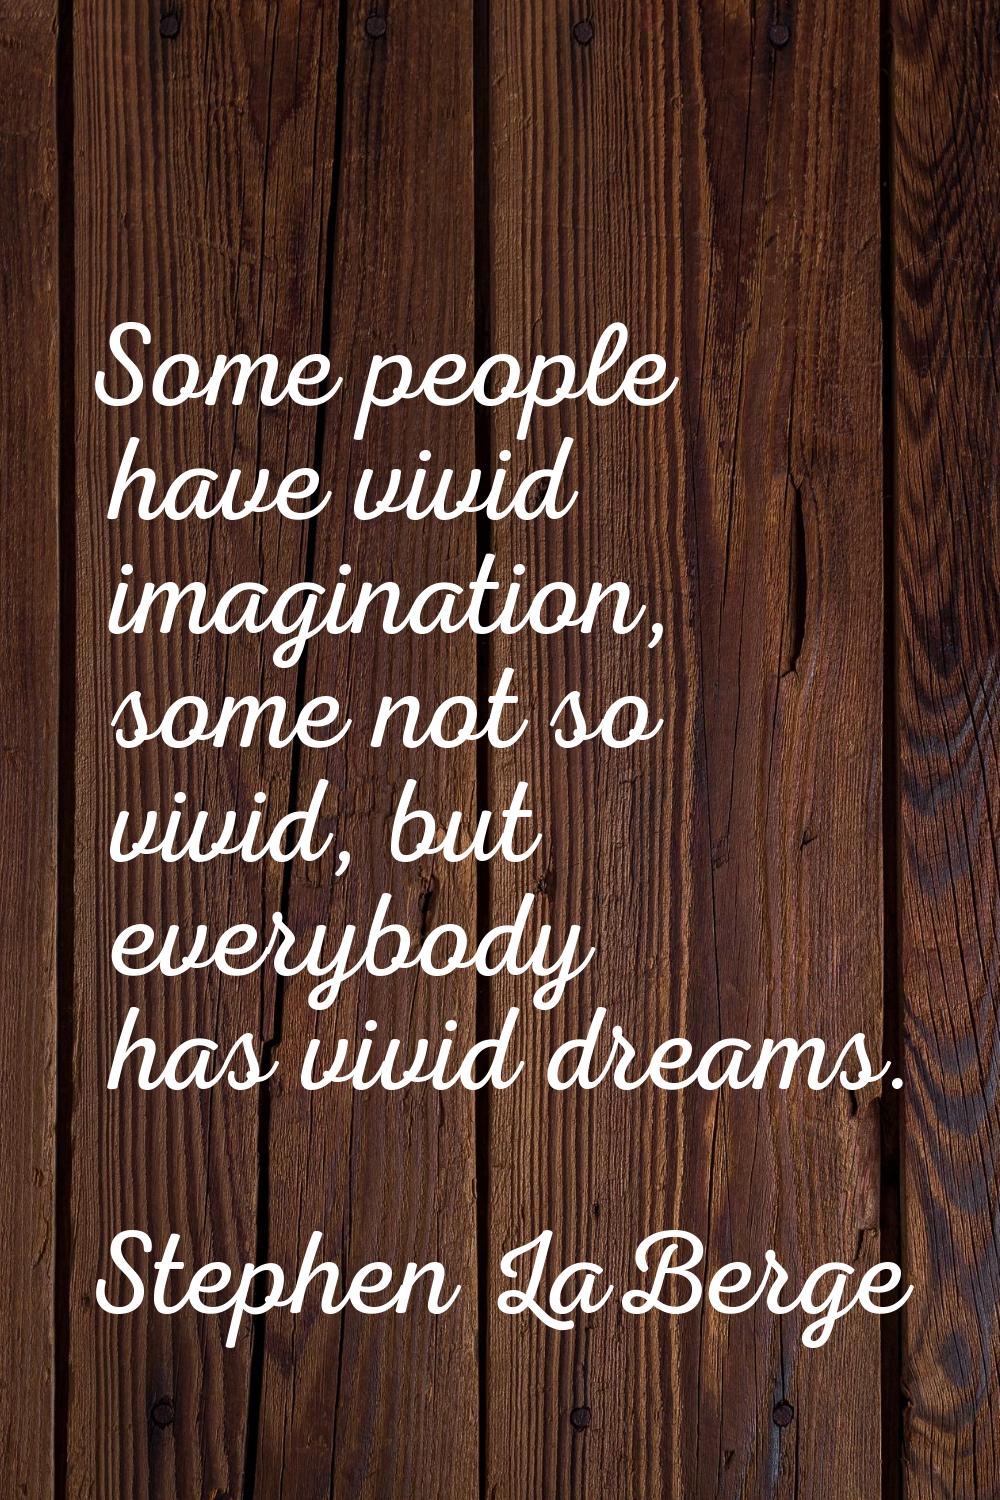 Some people have vivid imagination, some not so vivid, but everybody has vivid dreams.